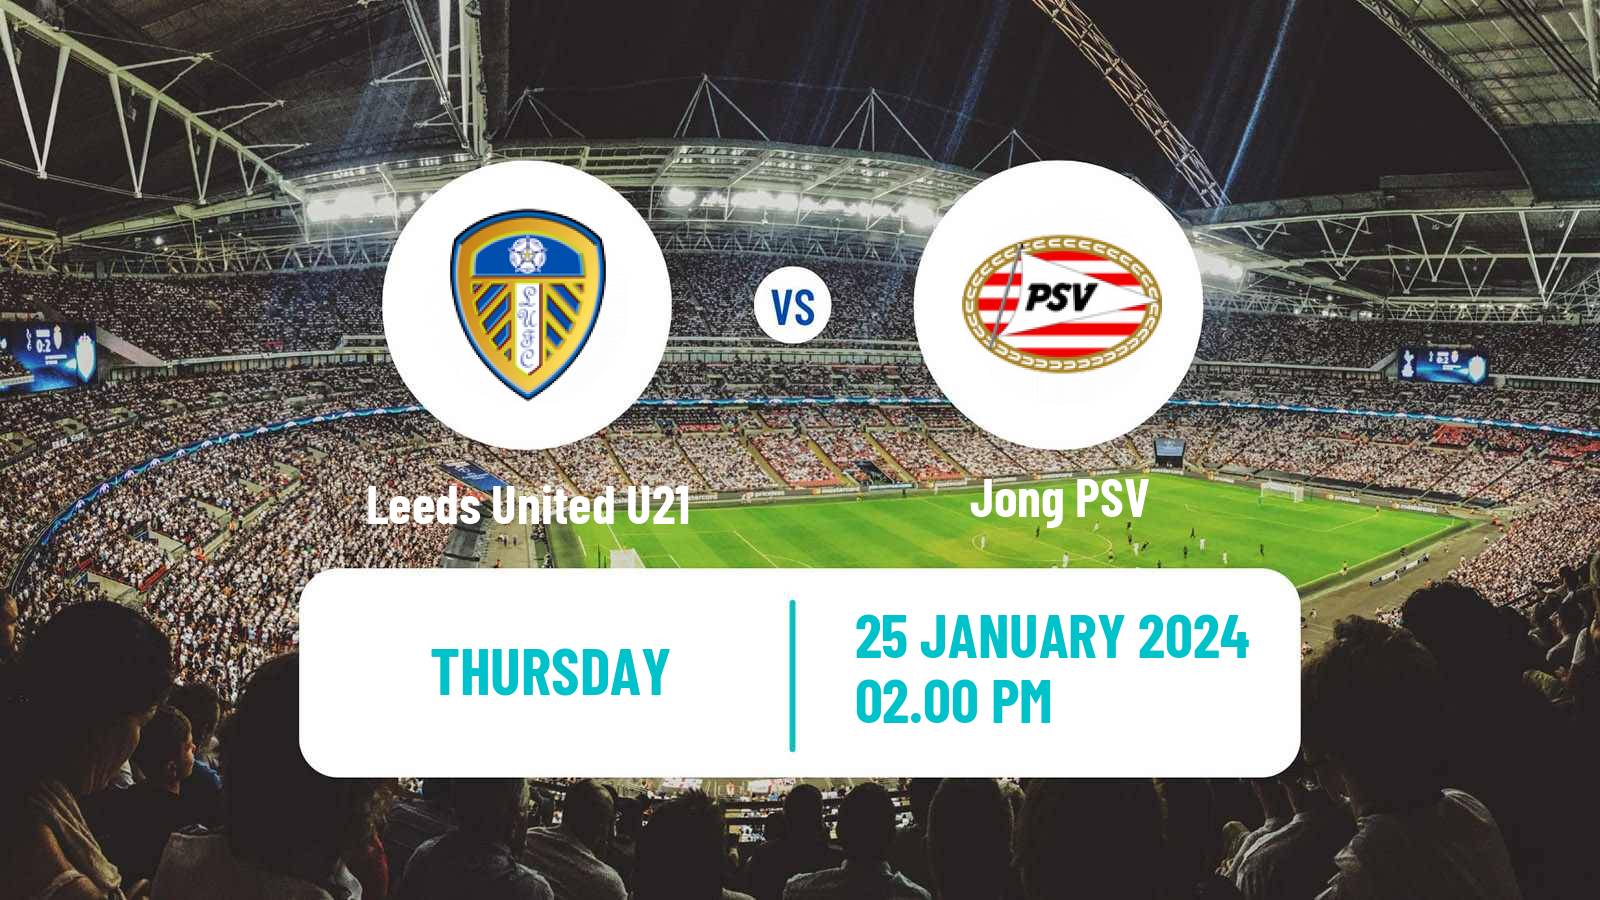 Soccer English Premier League International Cup Leeds United U21 - Jong PSV